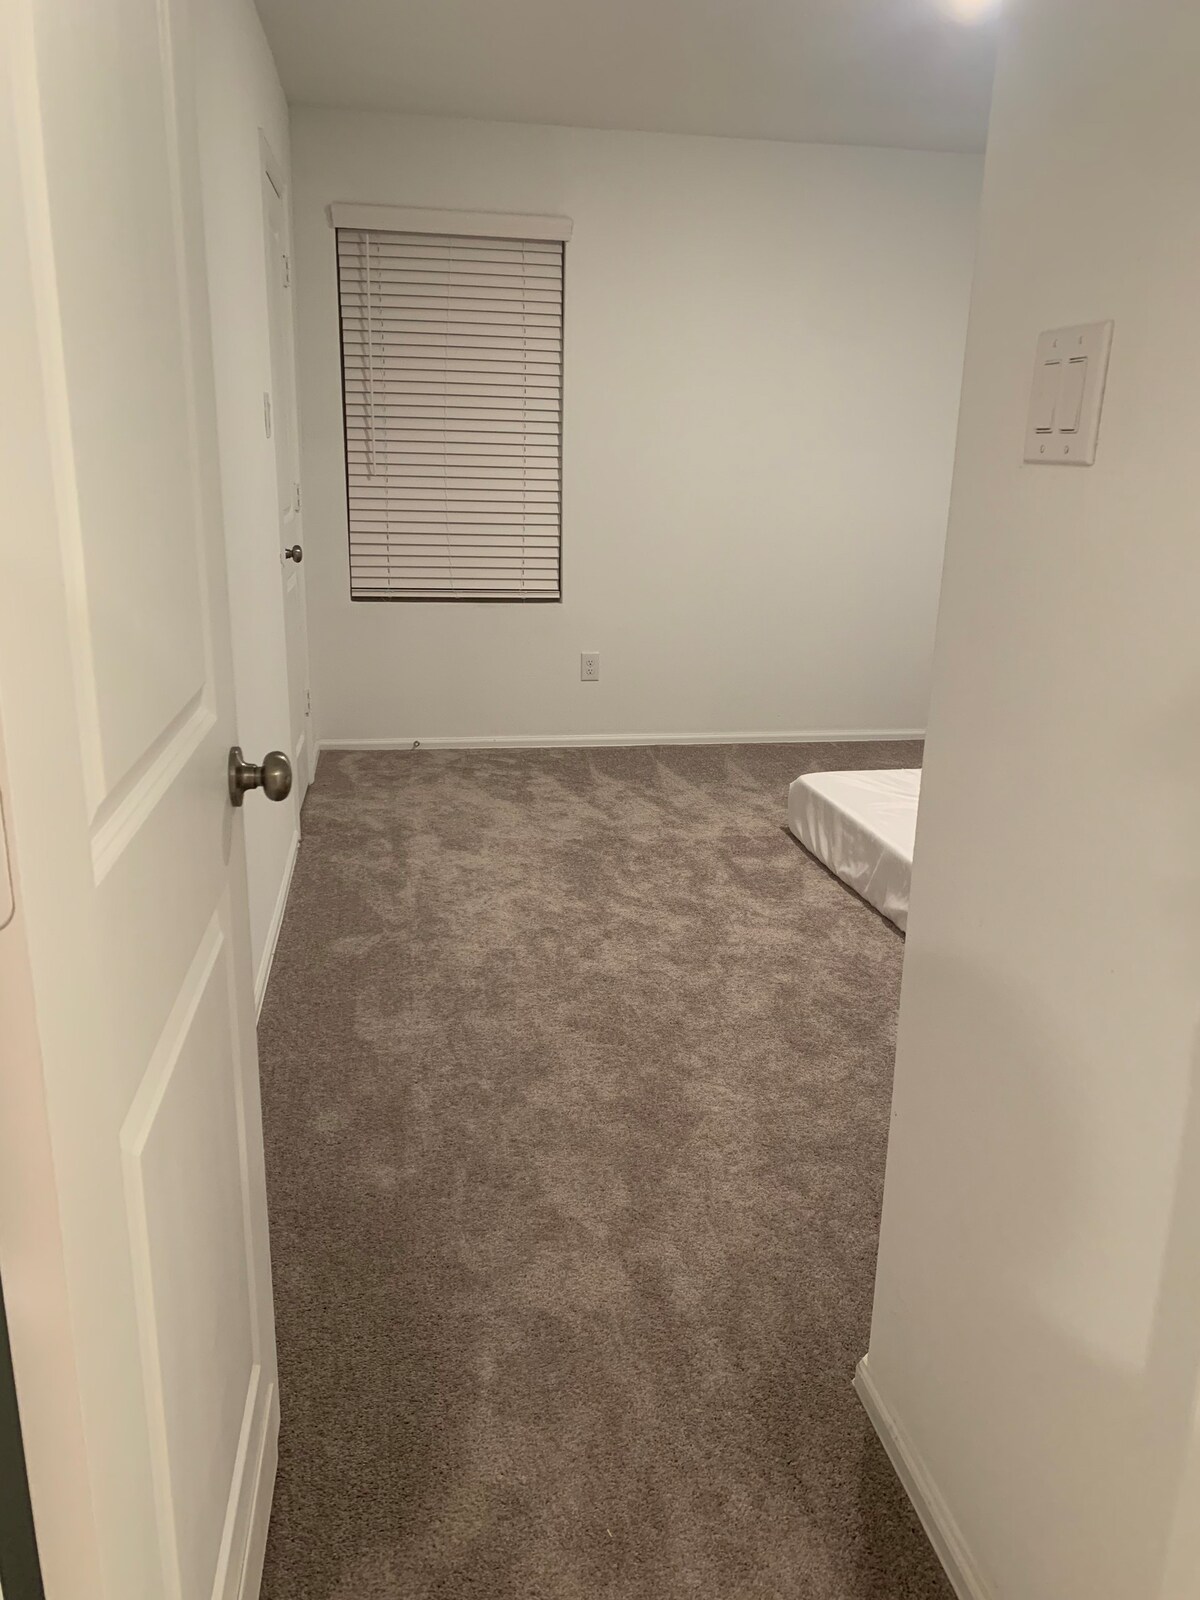 Simple private room